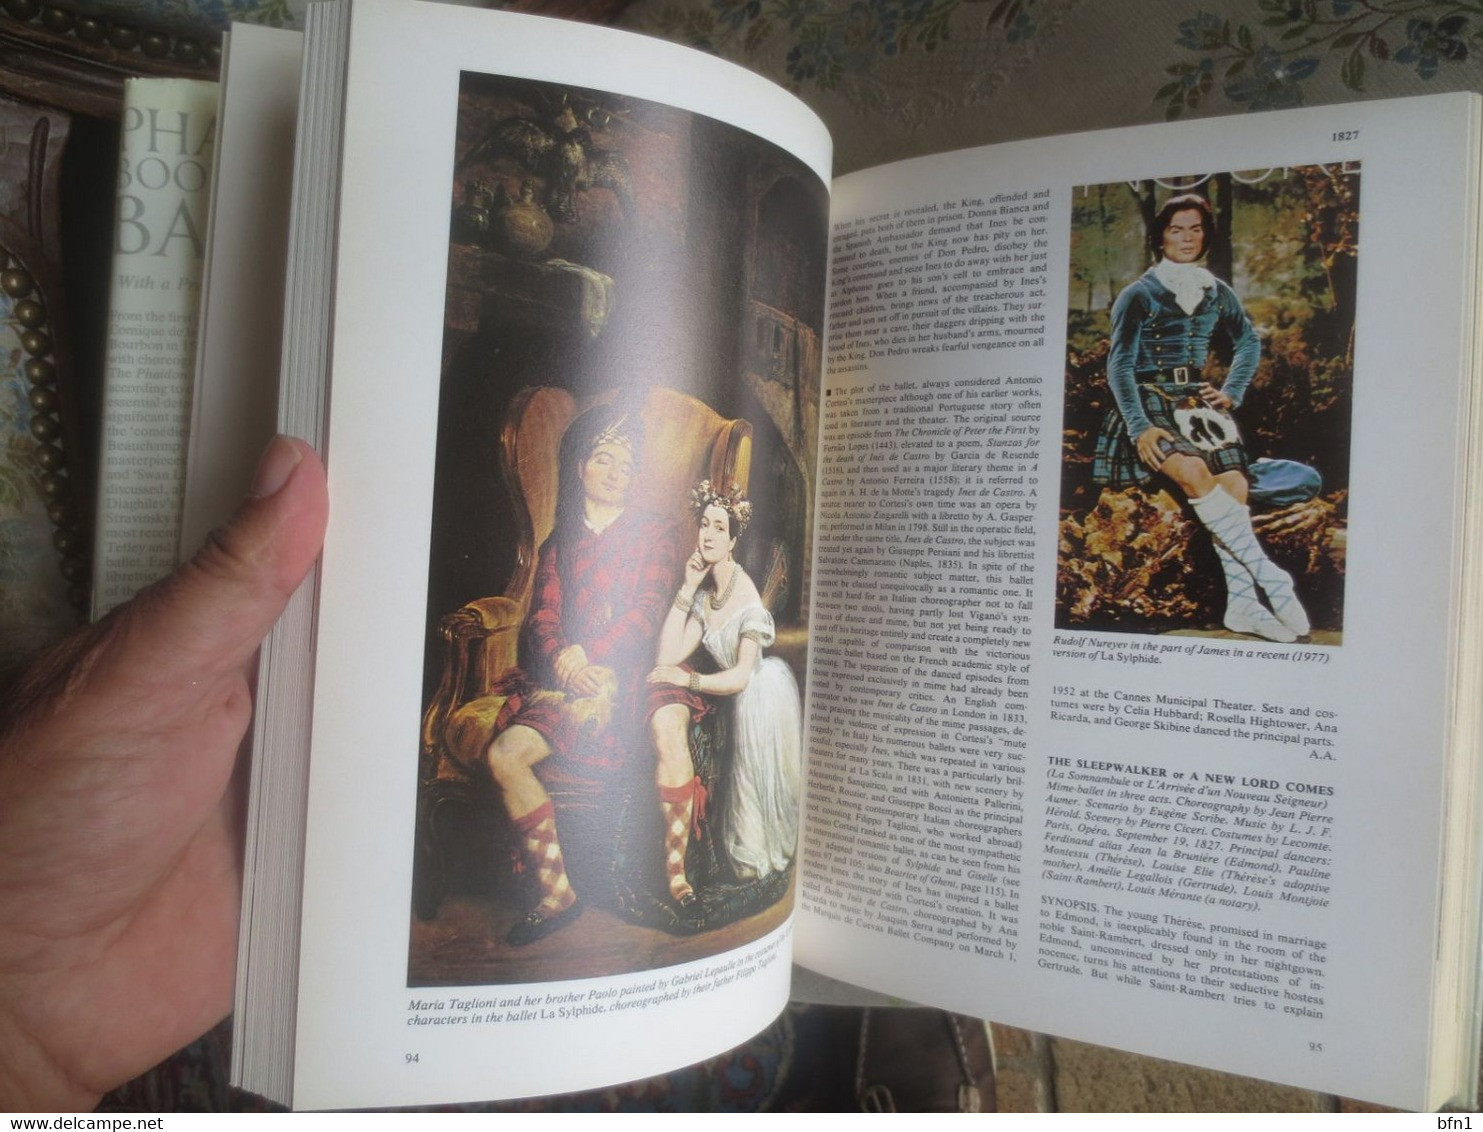 Phaidon book of the ballet Hardcover – January 1, 1981 by RICCARDO MEZZANOTTE (Editor), RUDOLF NUREYEV (Preface)